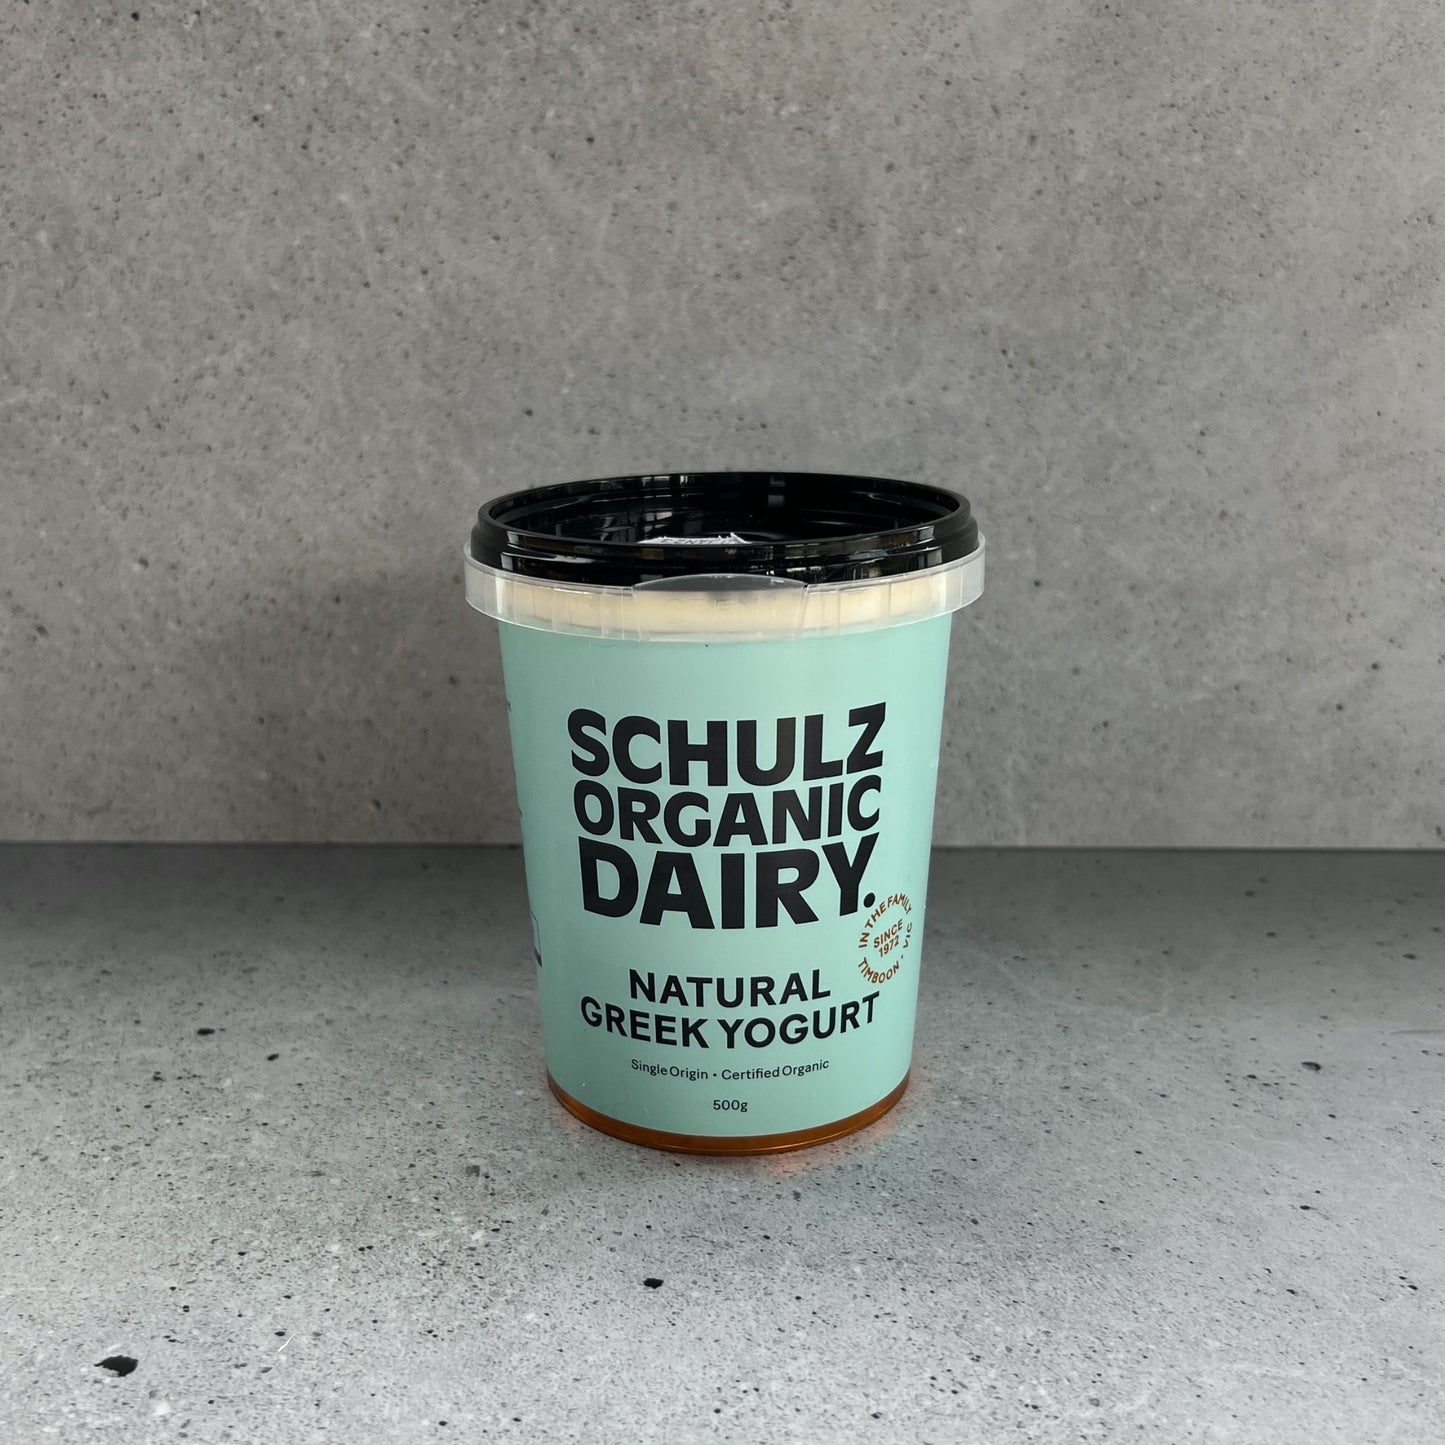 Greek yogurt - Schulz organic dairy